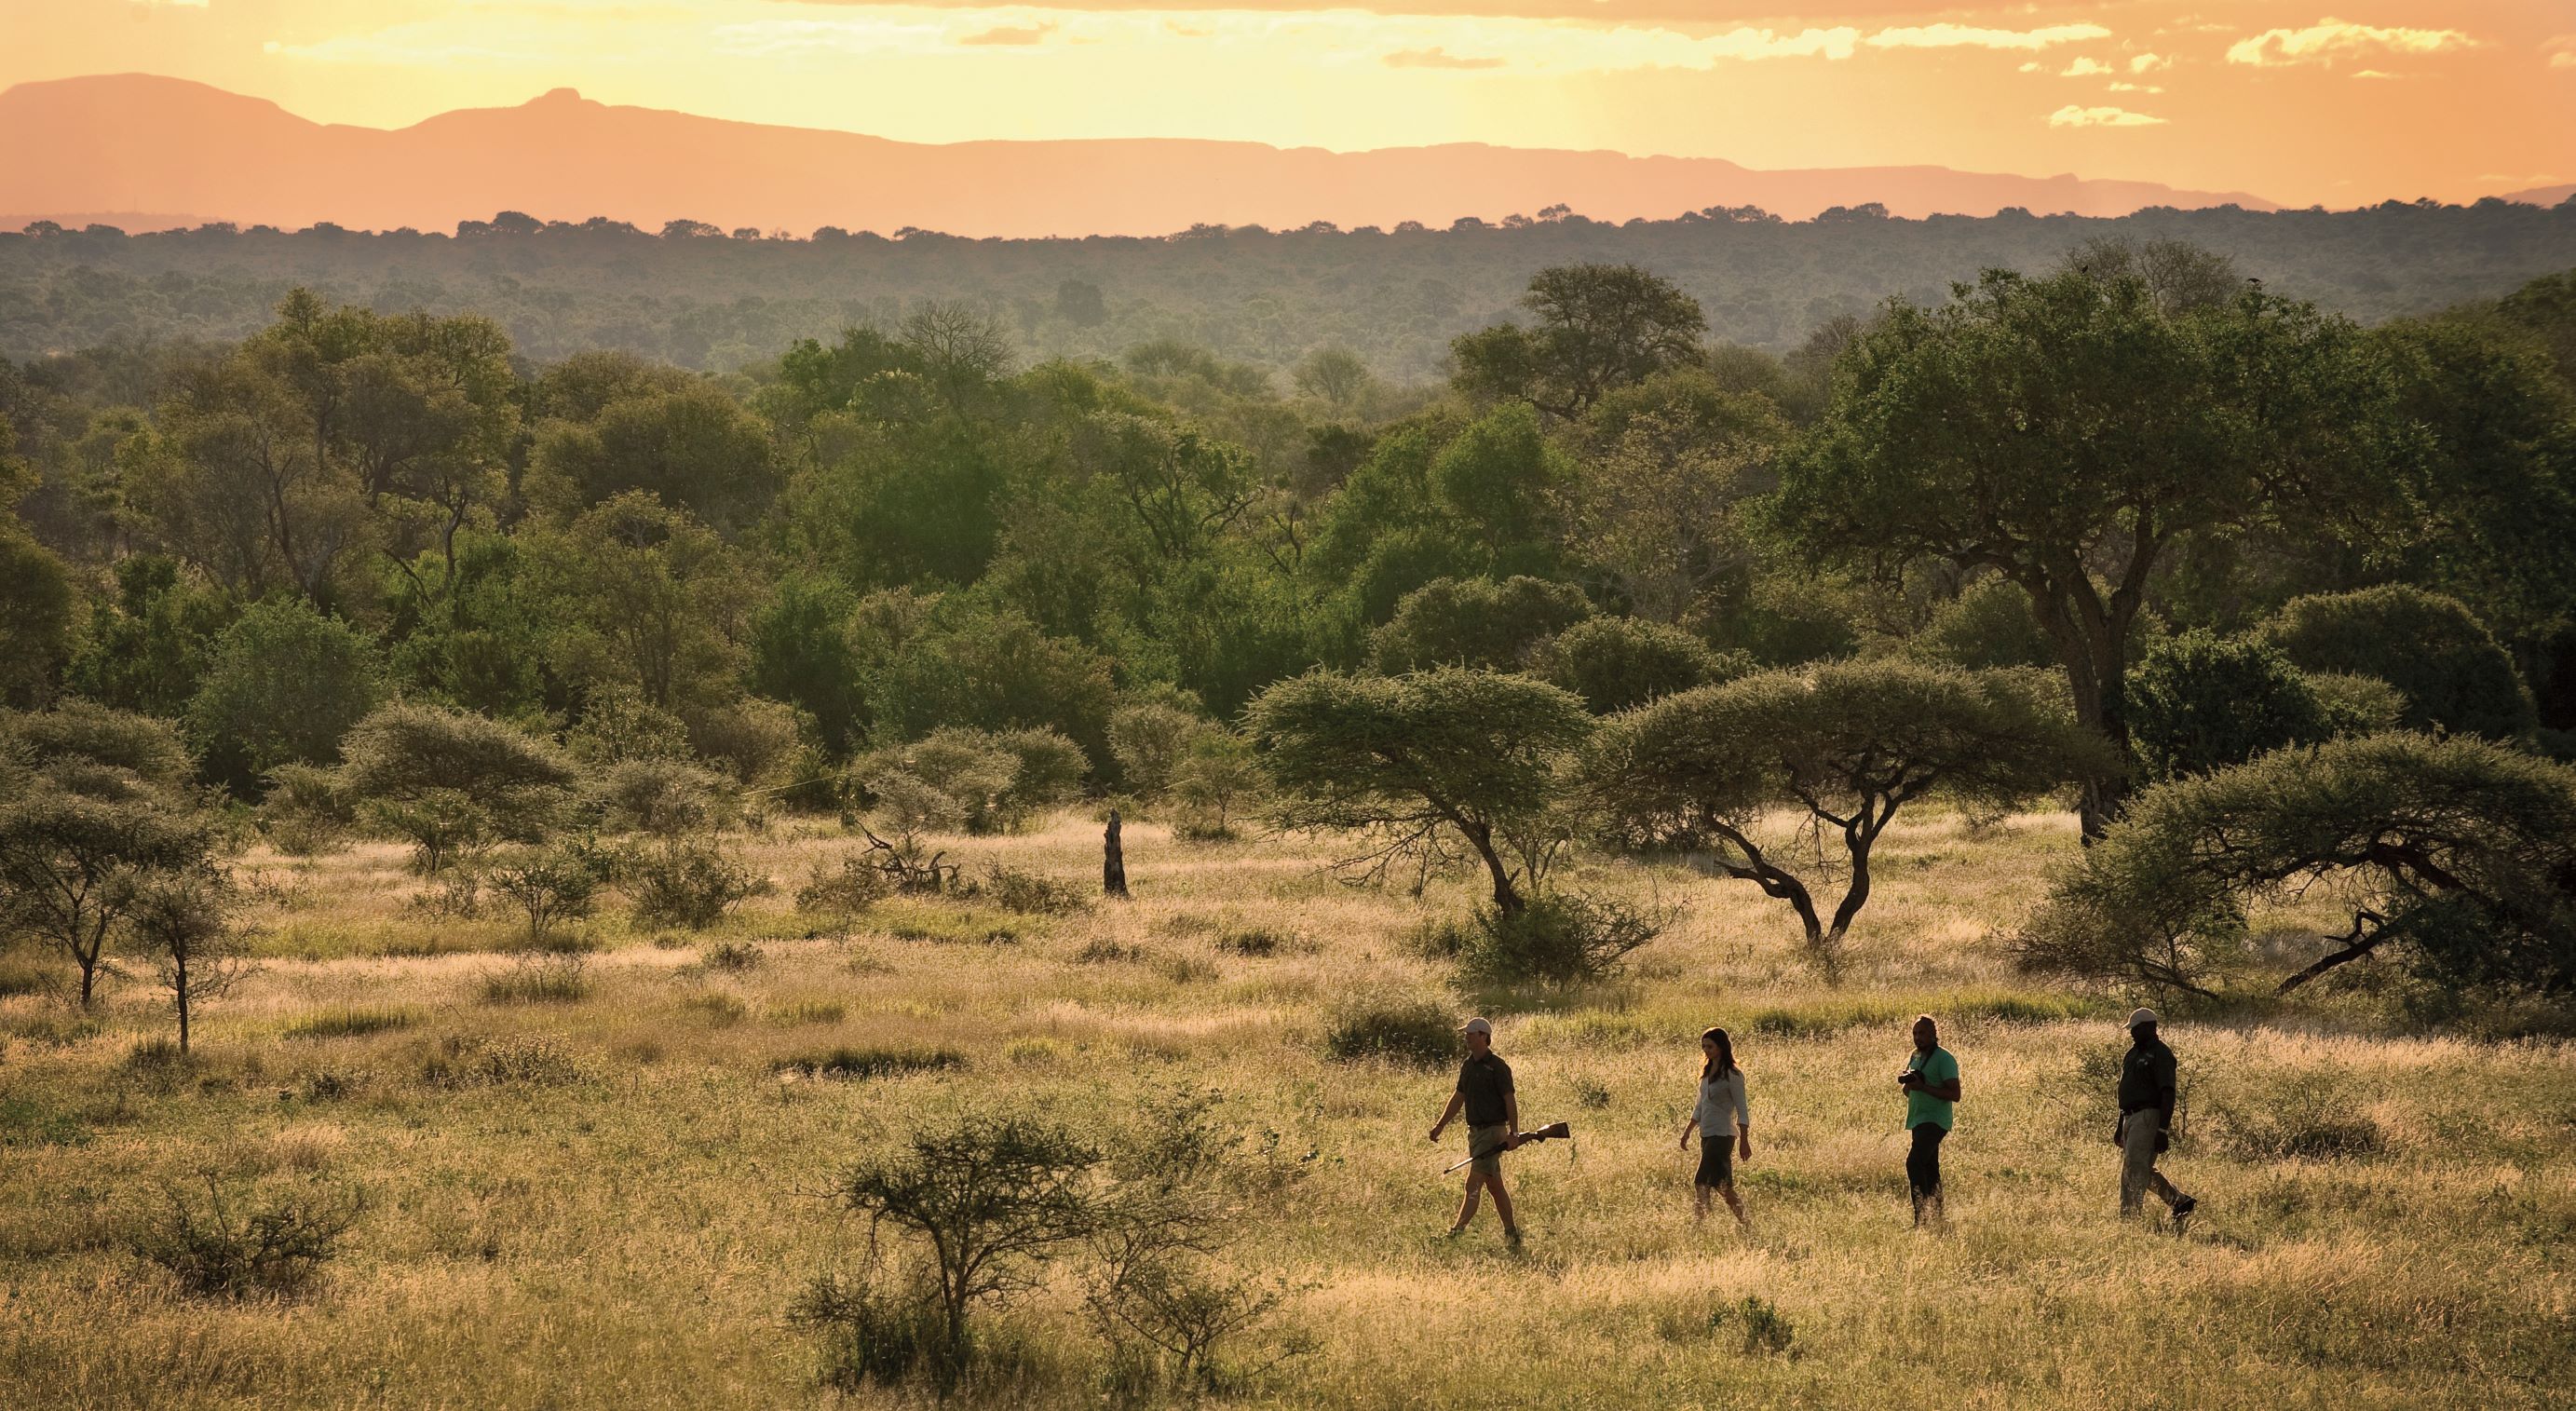 Lion Sands 的徒步獵遊行程，能讓遊客更深入探索迷人的非洲草原生態。